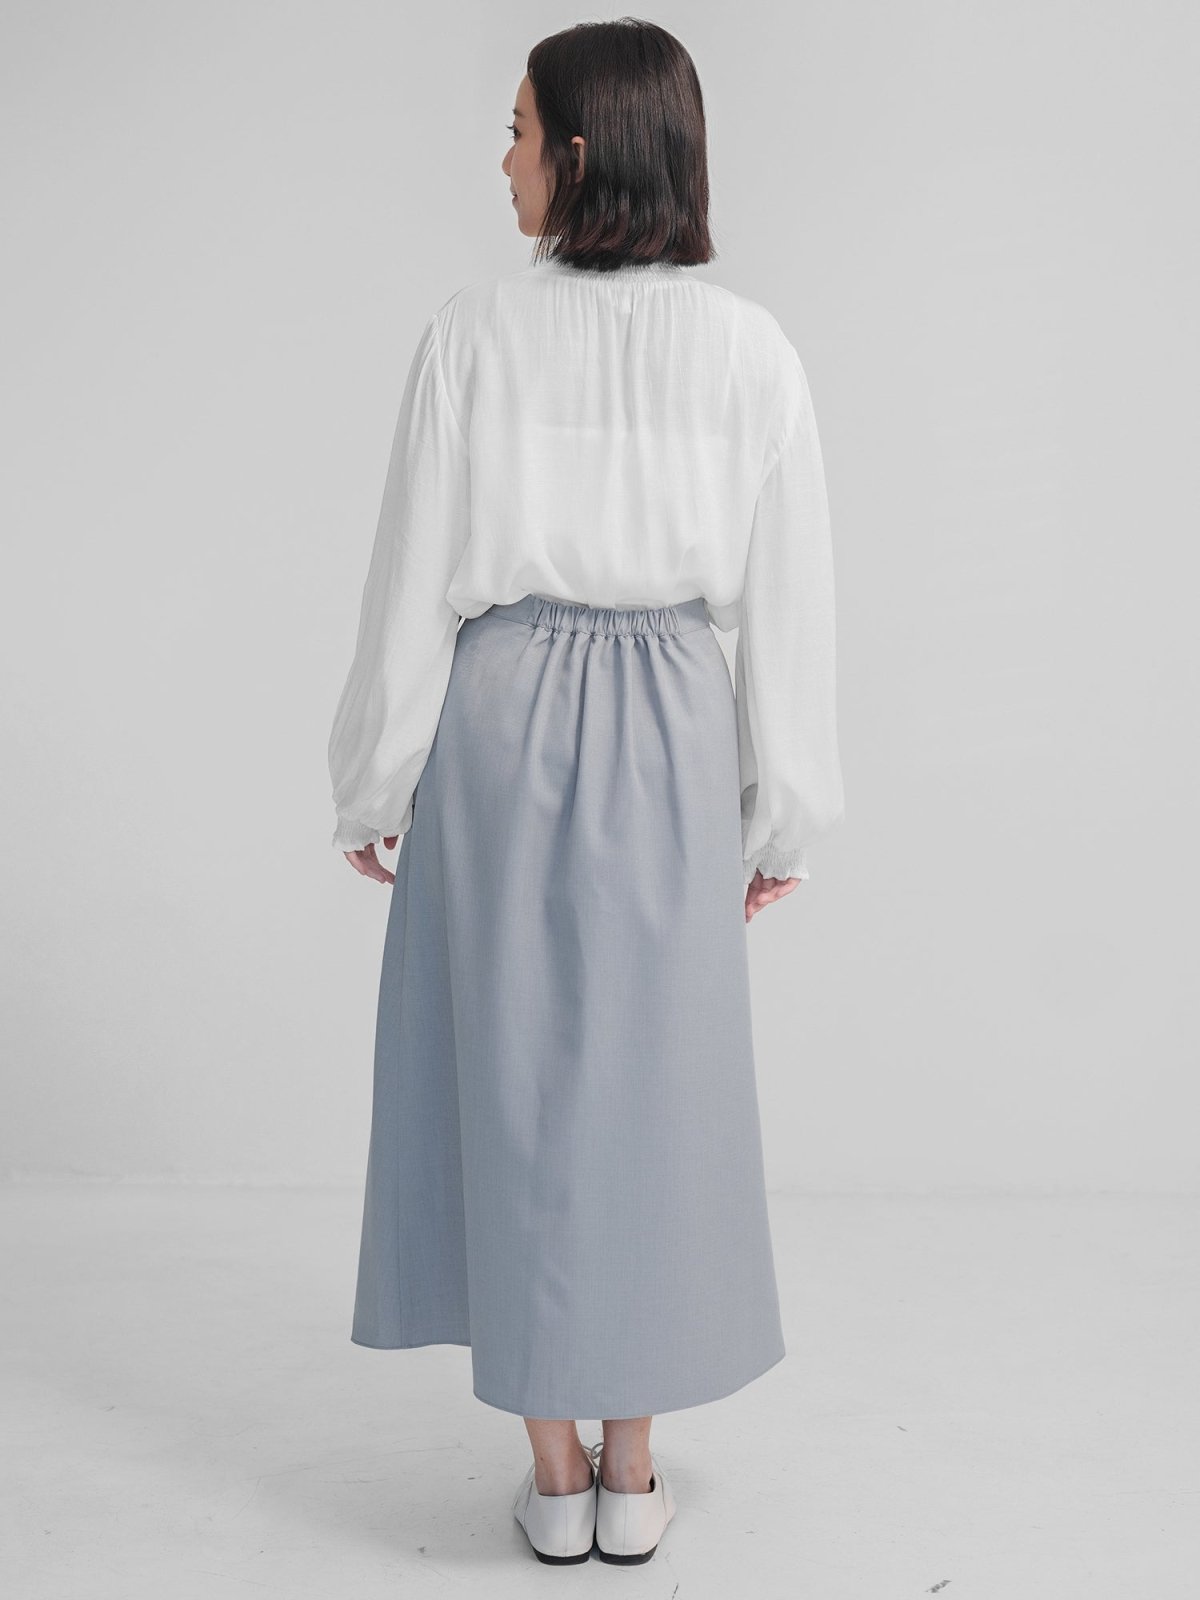 Joy Tie-detail Midi Skirt (Long/ Short ver.) - DAG-DD1081-23MistyBlueF - Misty Blue - Long (82cm) - D'zage Designs